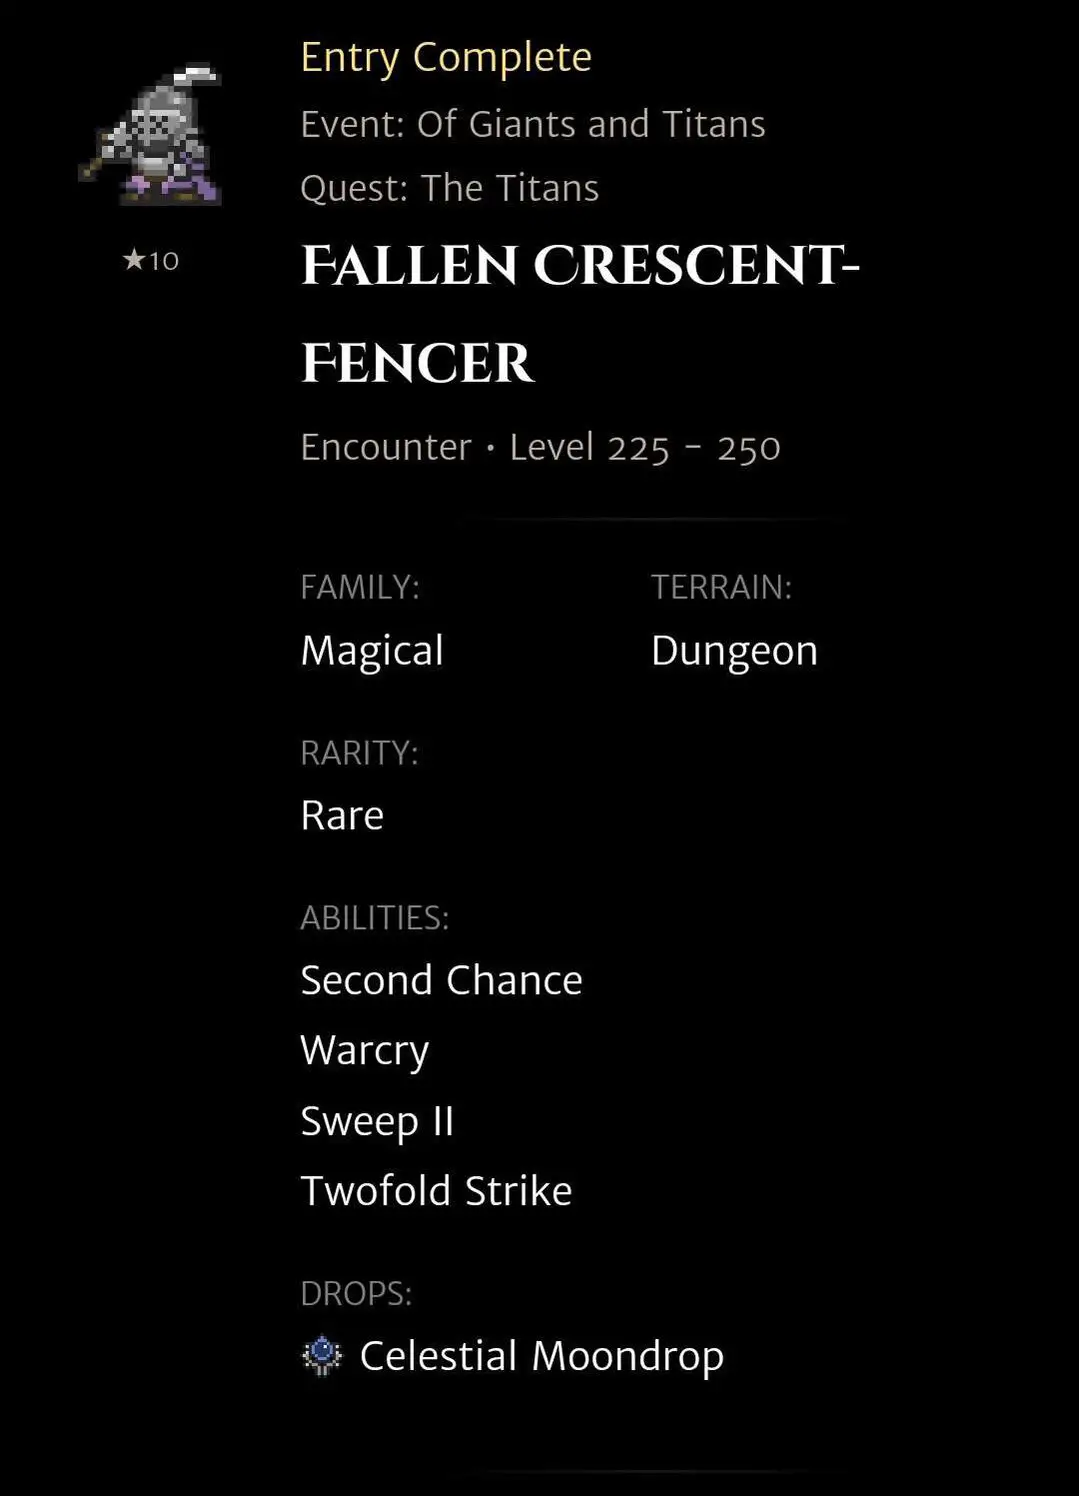 Fallen Crescent-Fencer codex entry